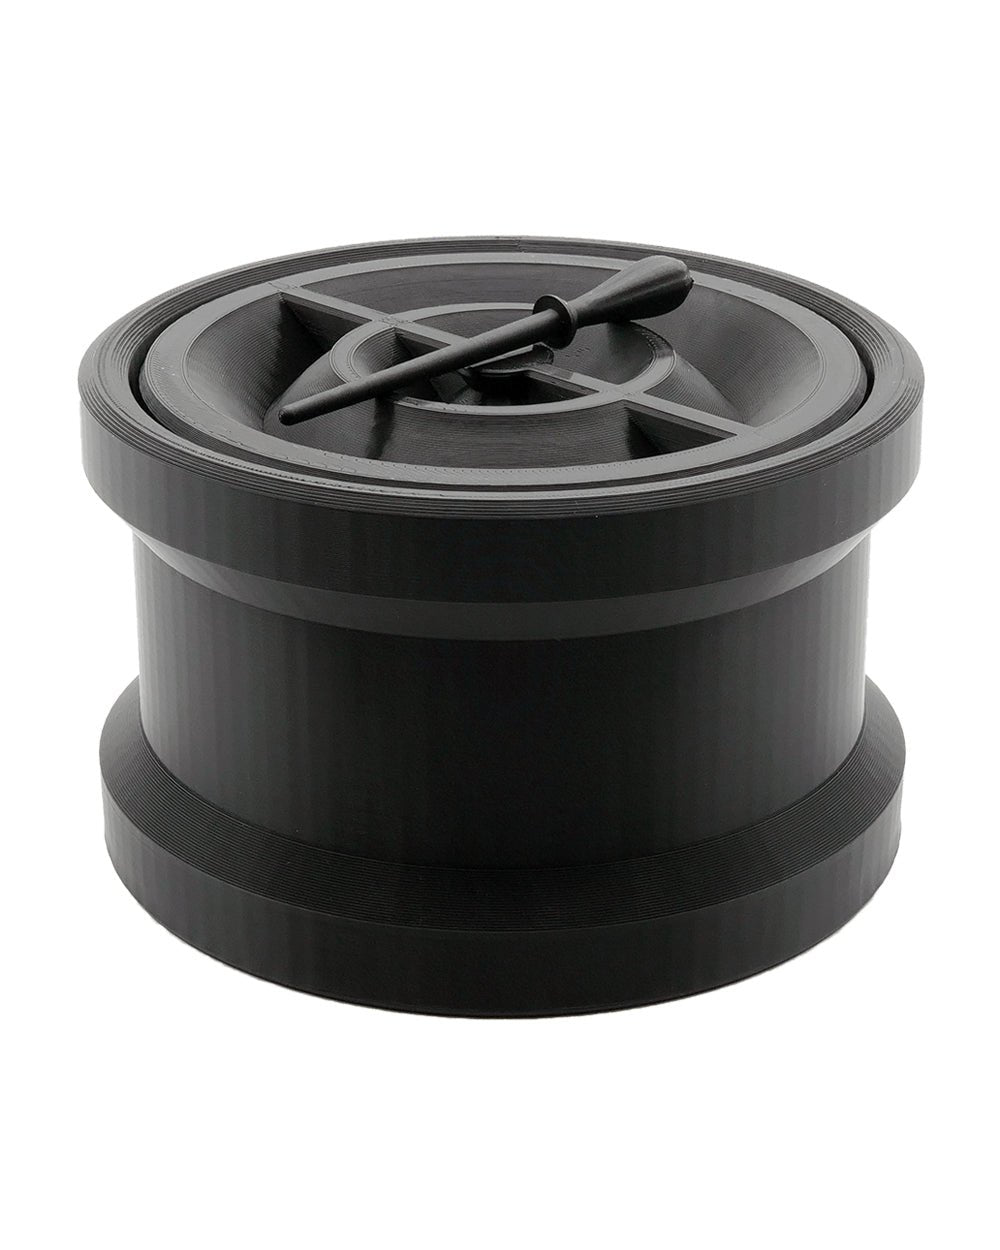 HUMBOLDT | Black Pre-Rolled Cones Filling Machine Cartridge 84mm | Fill 121 Cones Per Run - 2